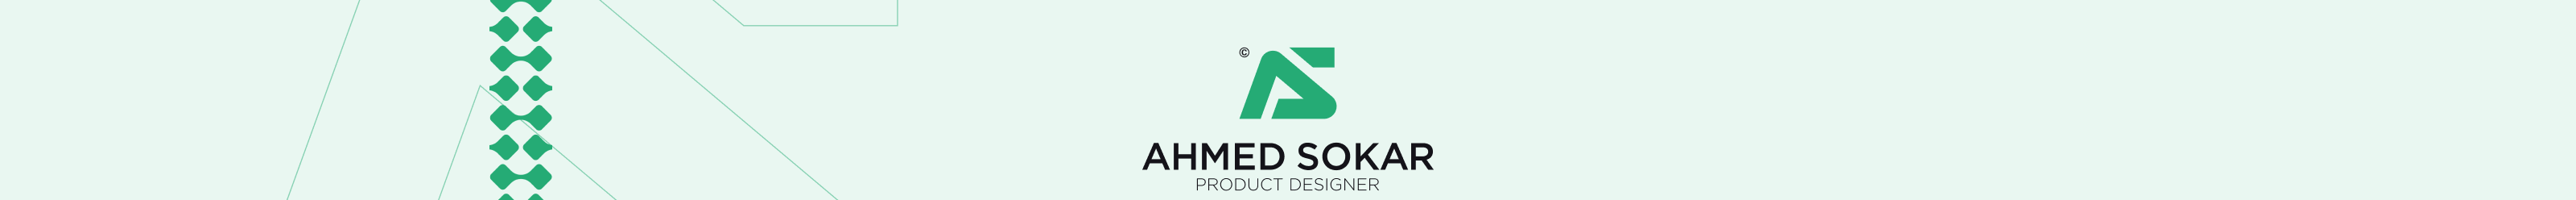 Profil-Banner von Ahmed Sokar